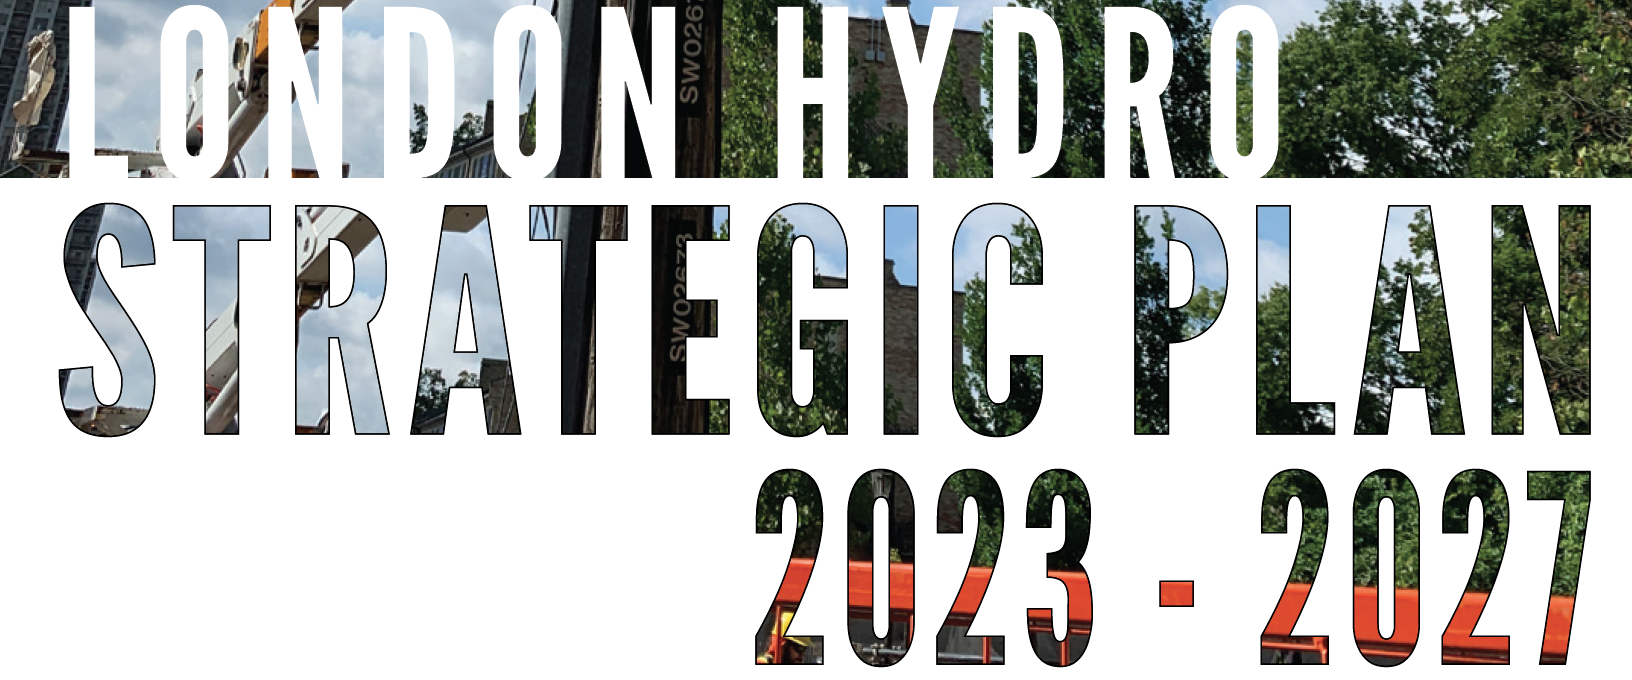 London Hydro Strategic Plan title image